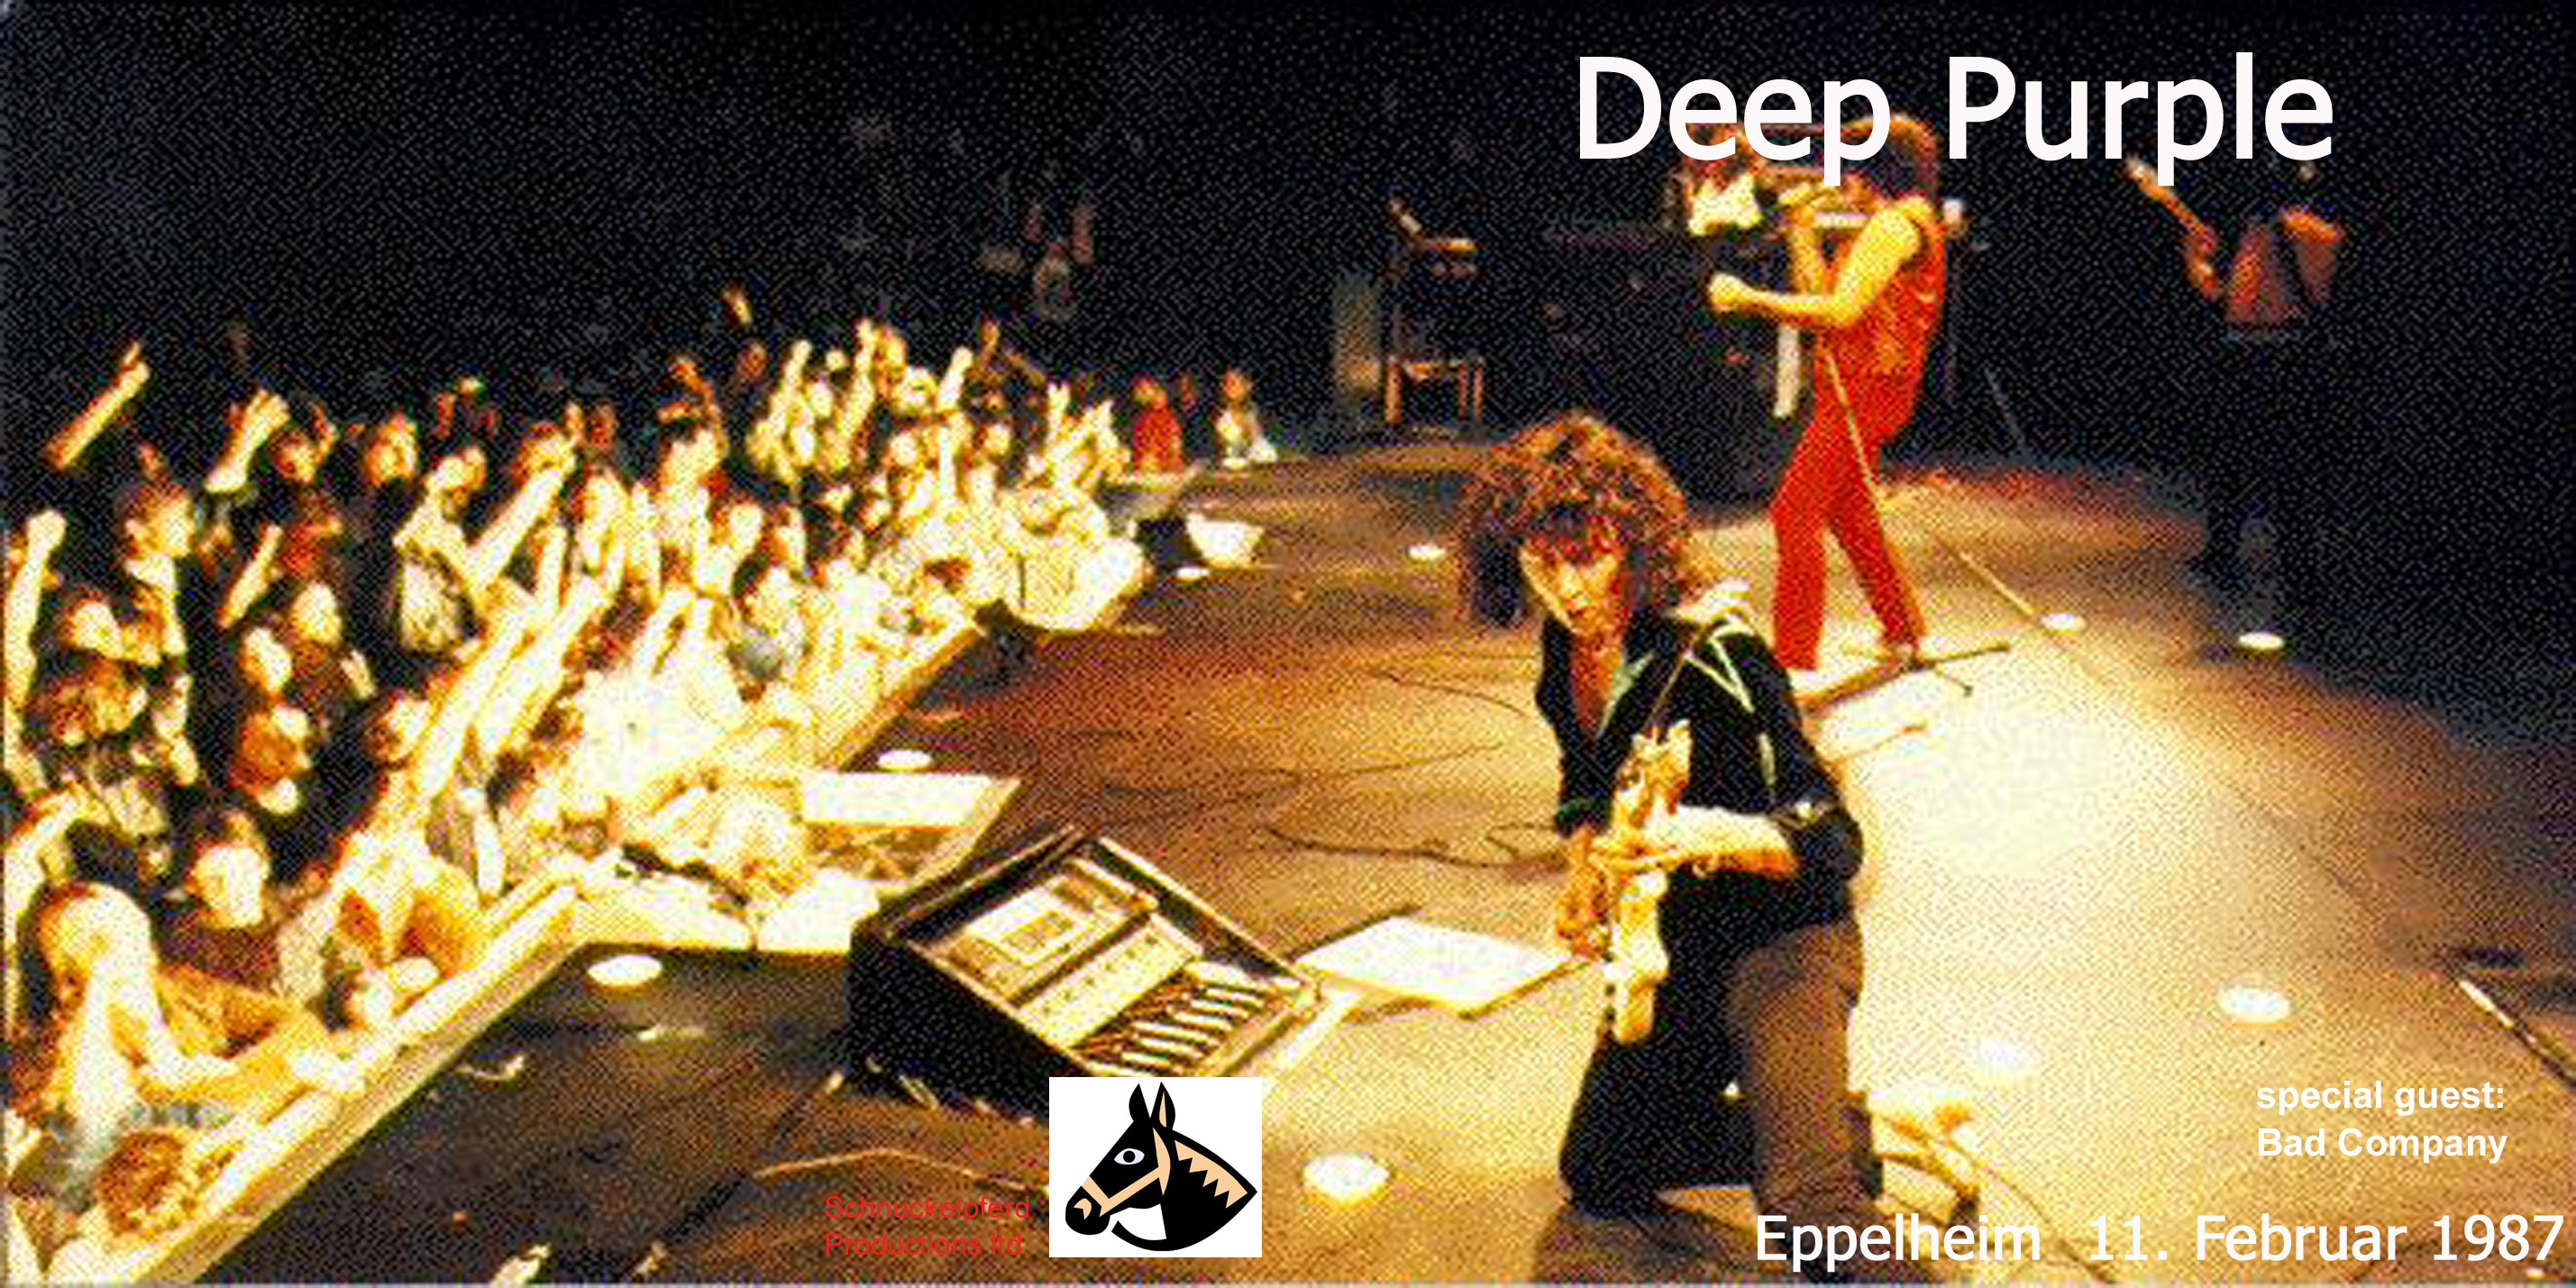 DeepPurple1987-02-11BadCompanyEppelheimGermany (2).jpg